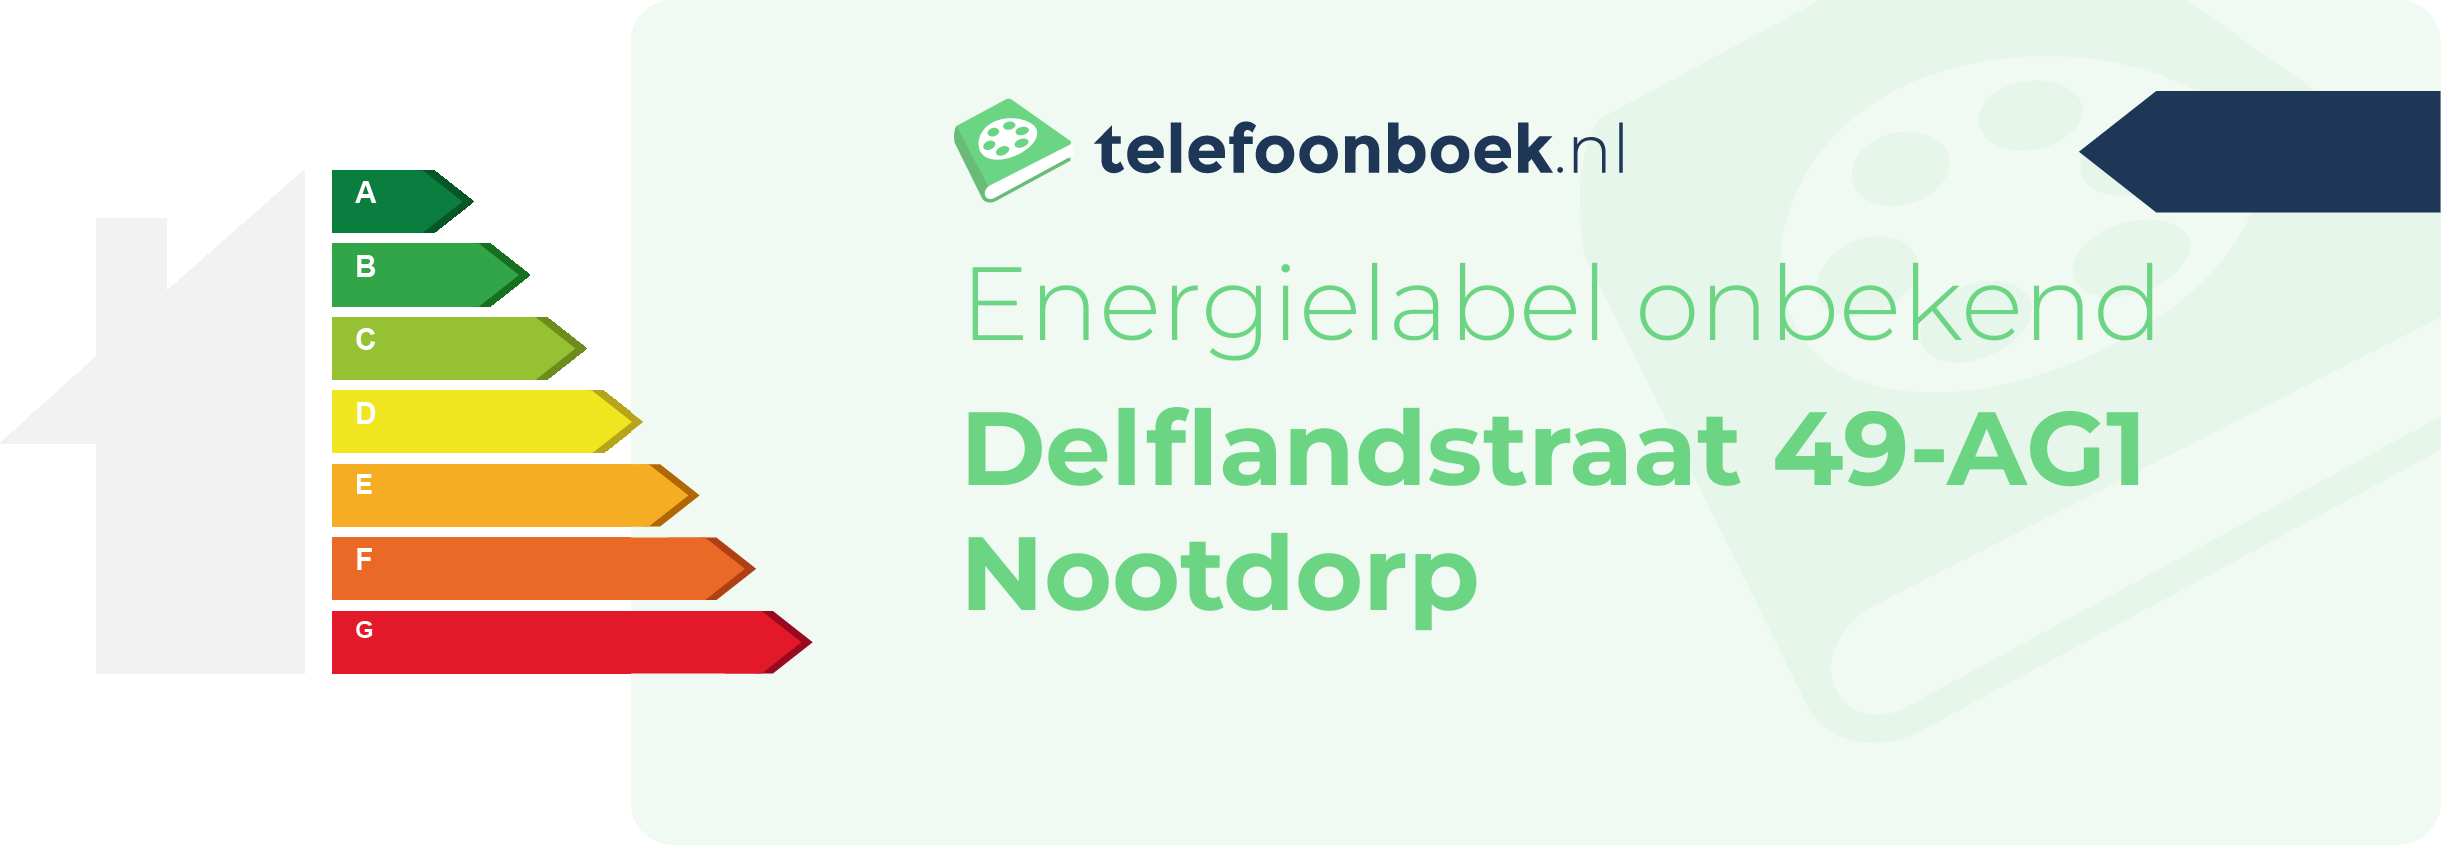 Energielabel Delflandstraat 49-AG1 Nootdorp